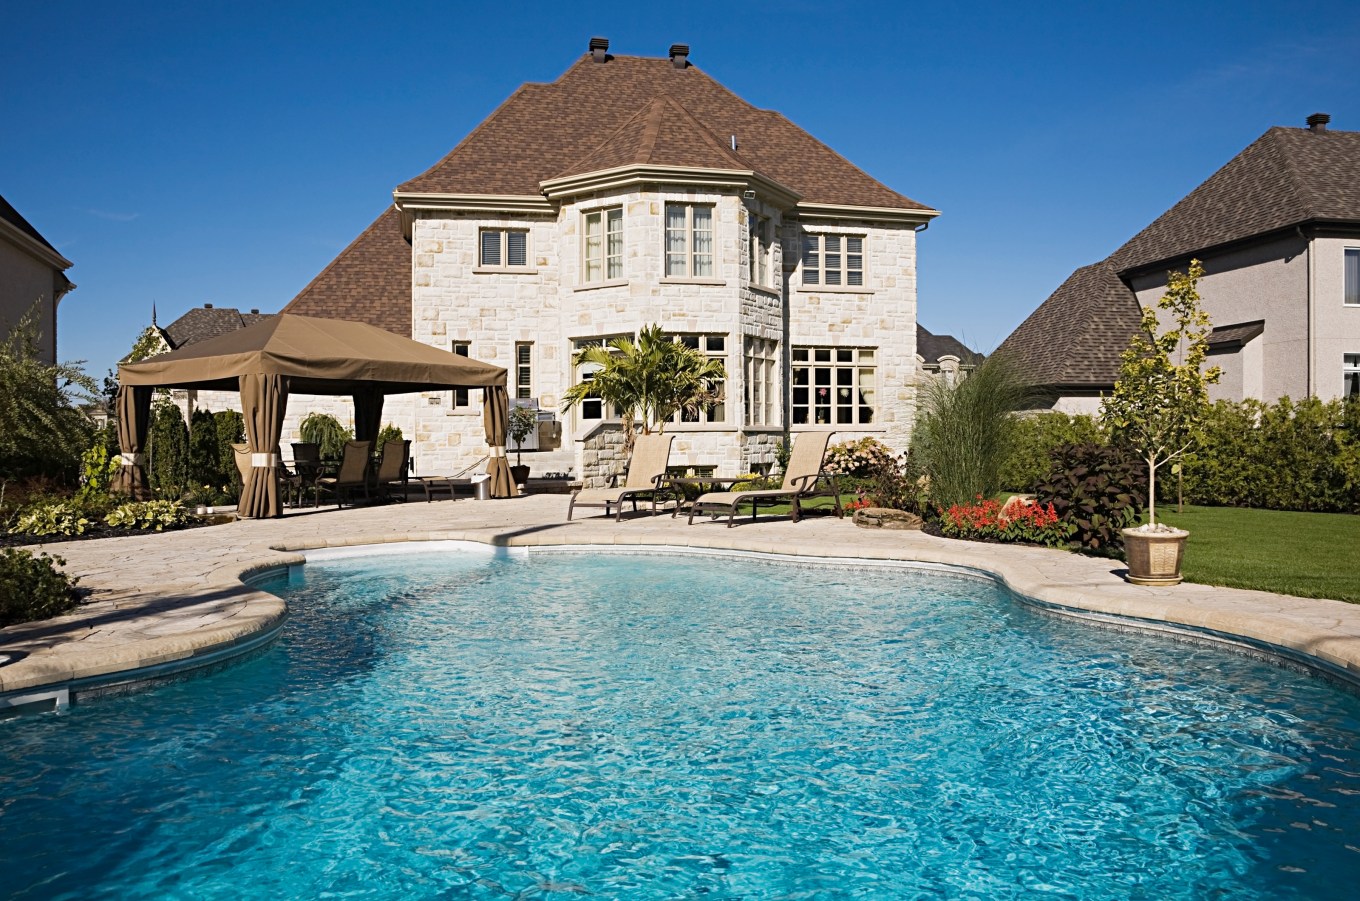 Safe alternatives to chlorine swimming pools image of inground pool in backyard of large home